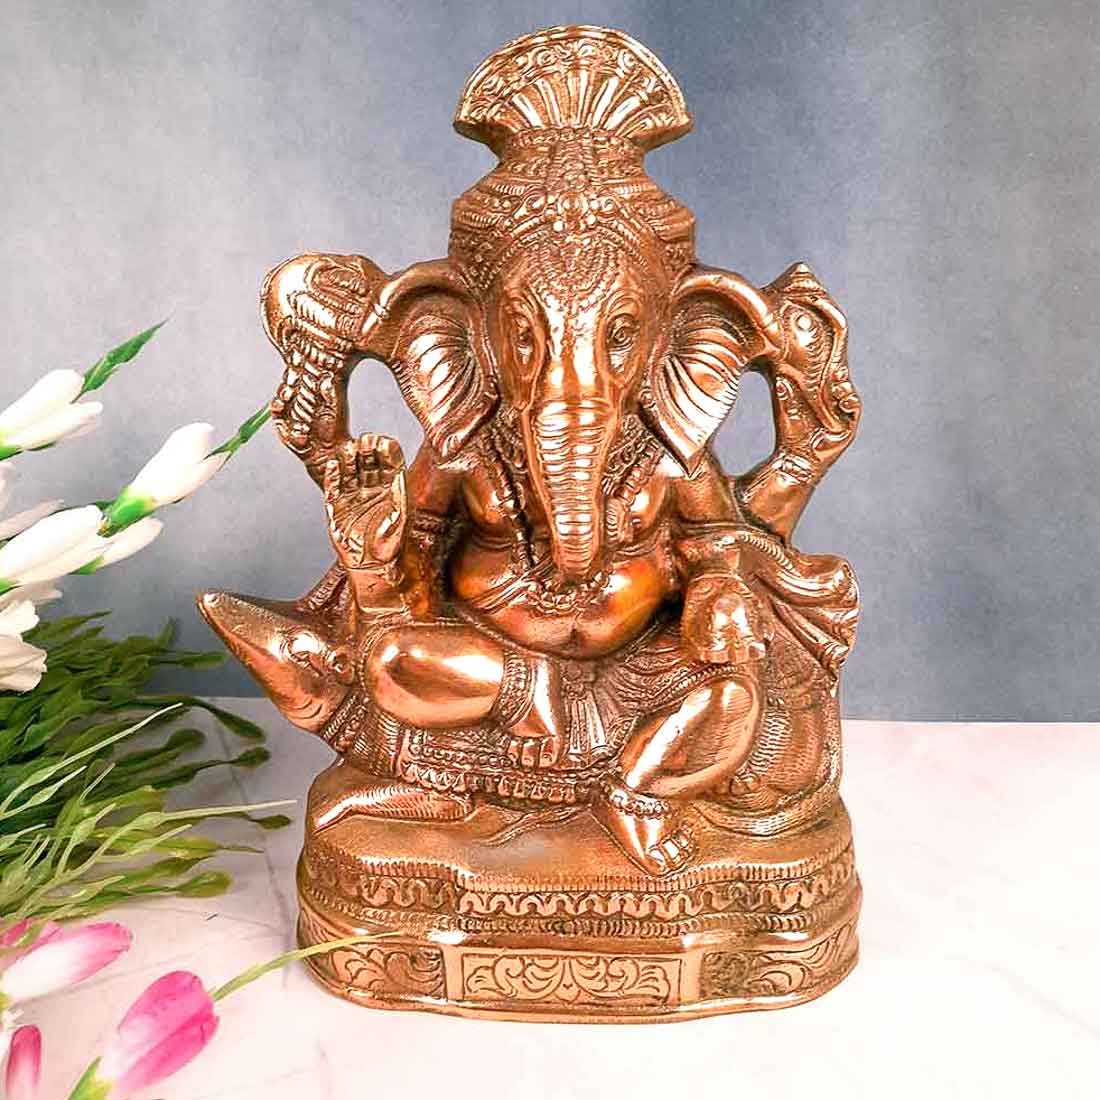 Ganesh Statue | Ganesh Ji Idol - for Puja Room & Home Entrance | Ganpati Murti For Temple Decor, Vastu, Diwali & House Warming Gift  - 12 Inch